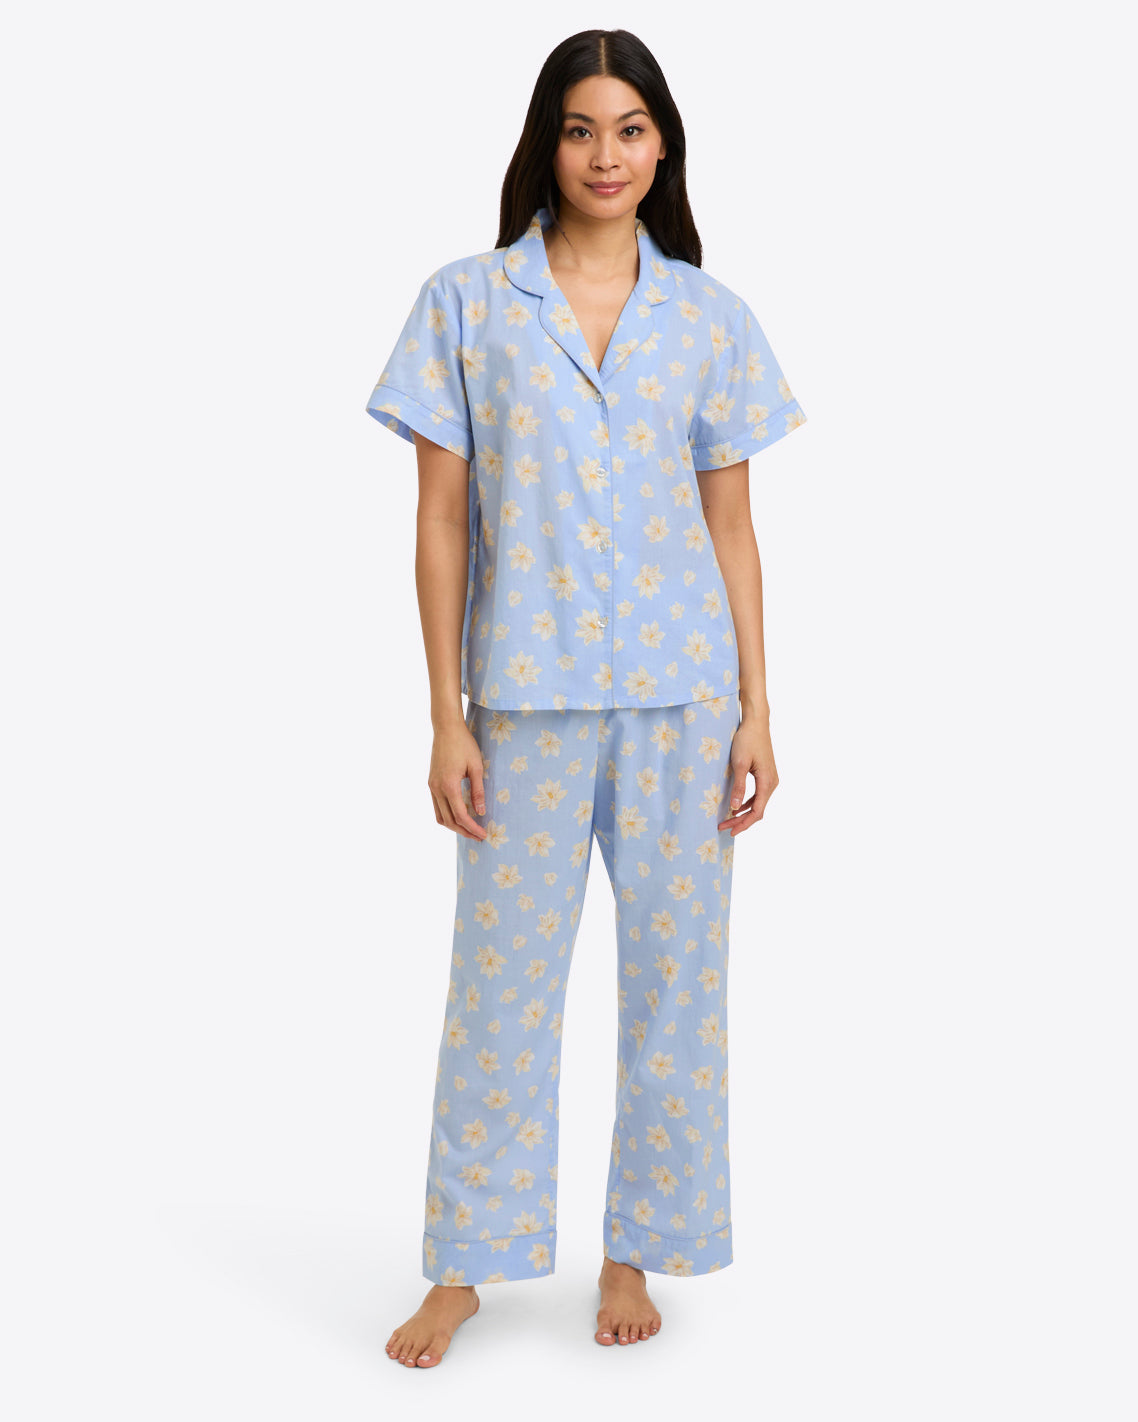 Linda Pajama Set in Magnolia